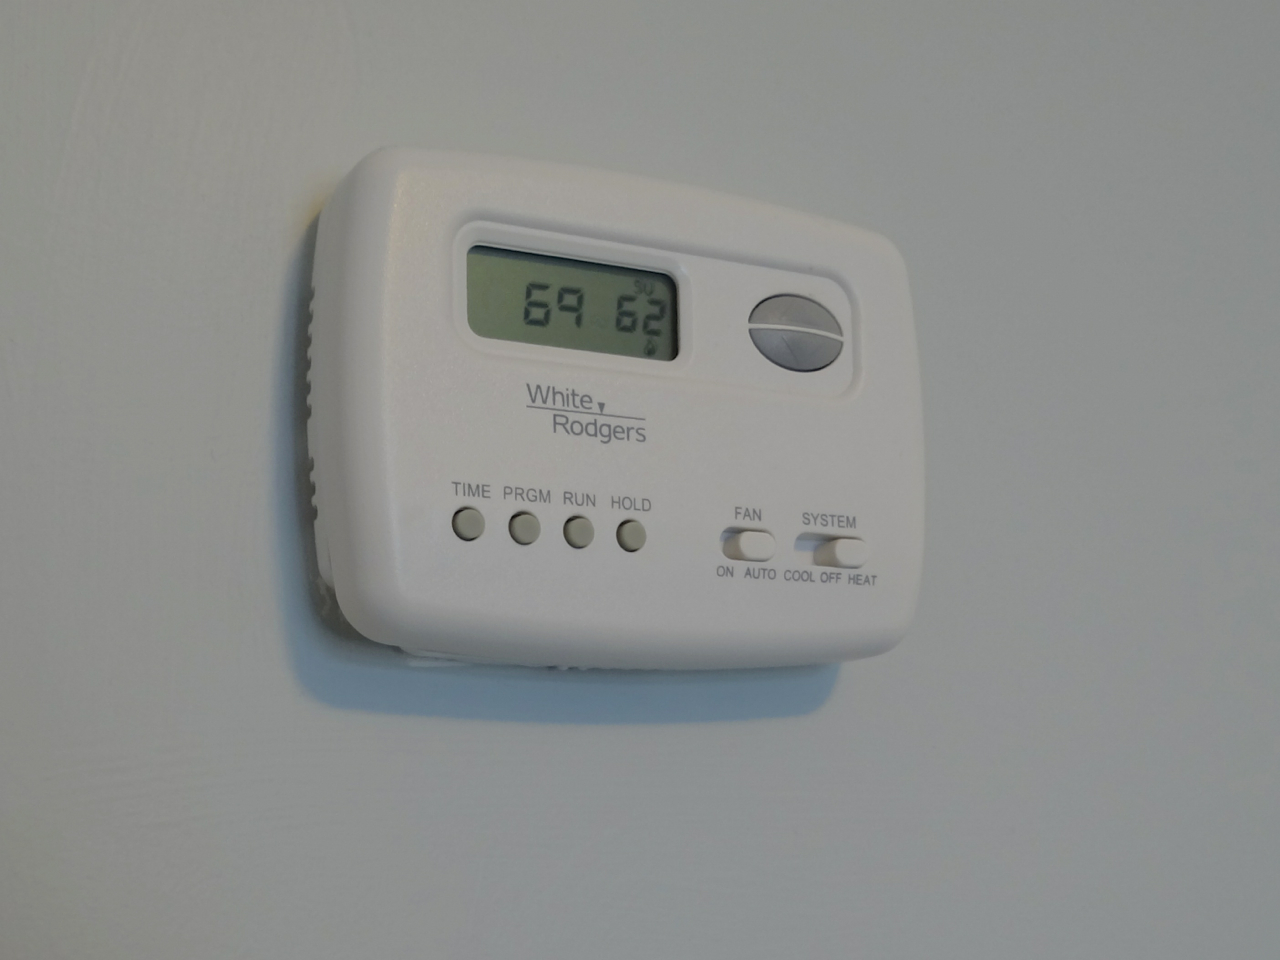 Programable heating controls